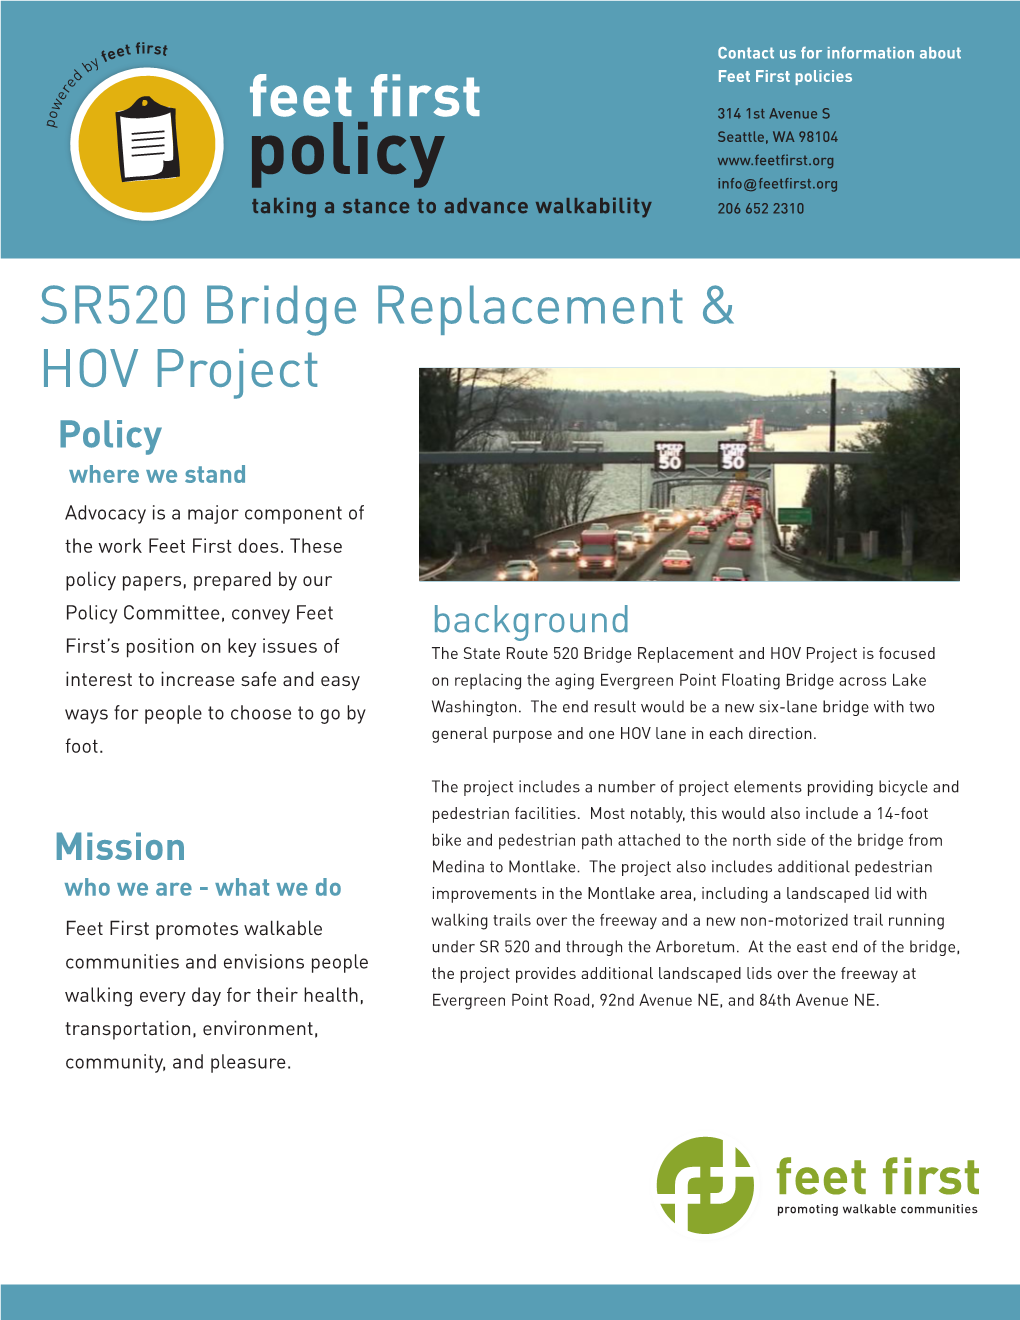 SR520 Bridge Replacement HOV Project